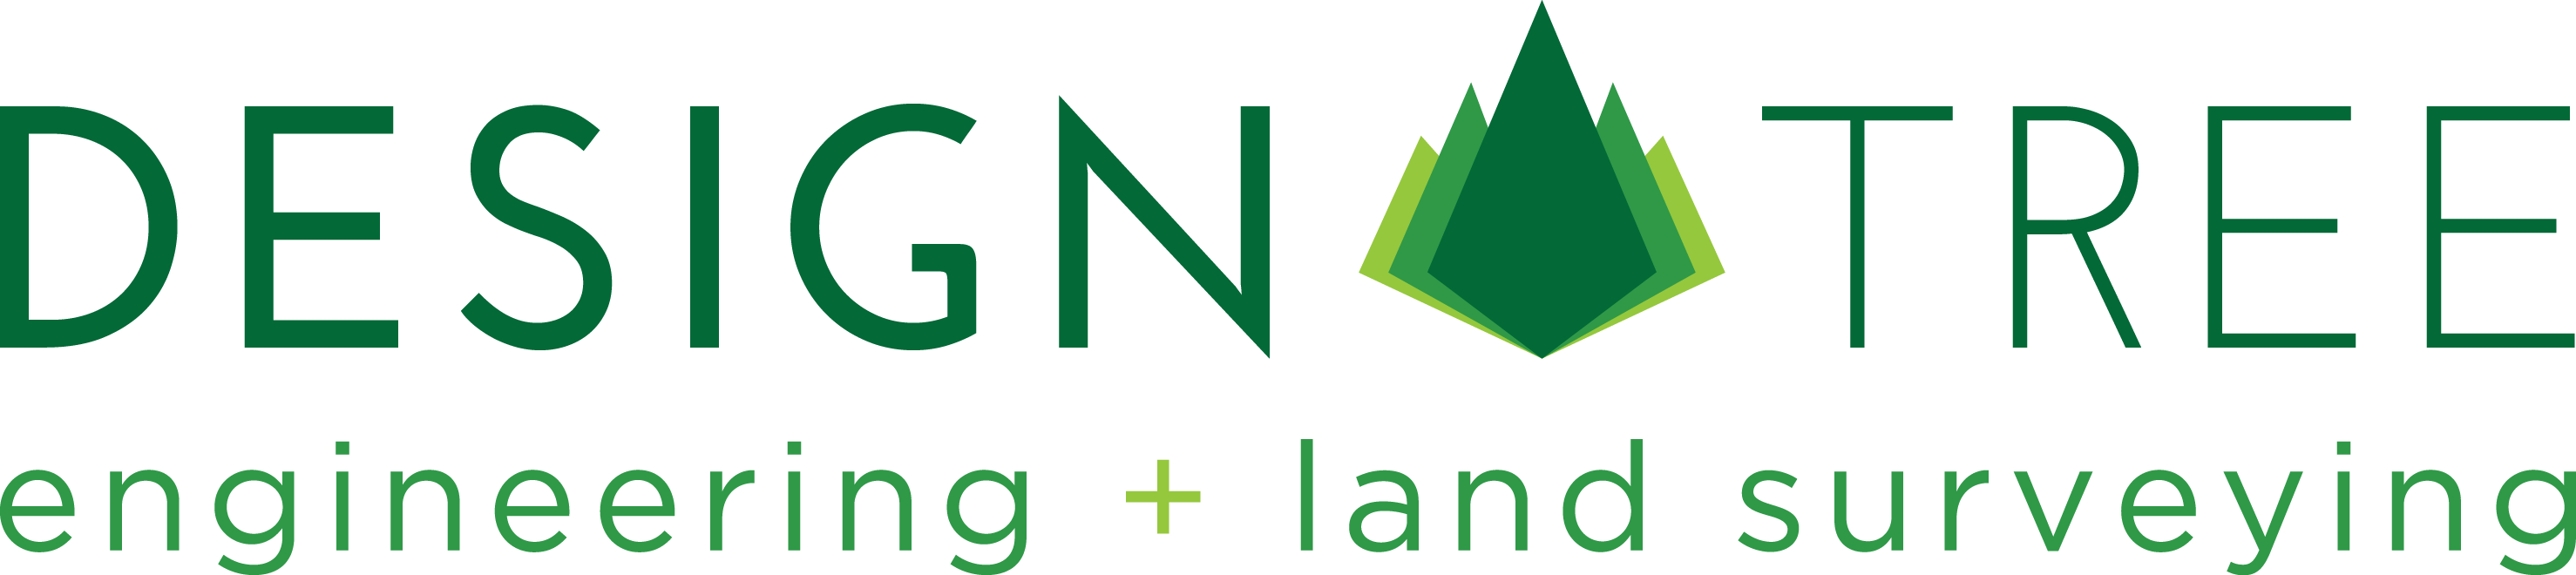 Design Tree Logo-RGB